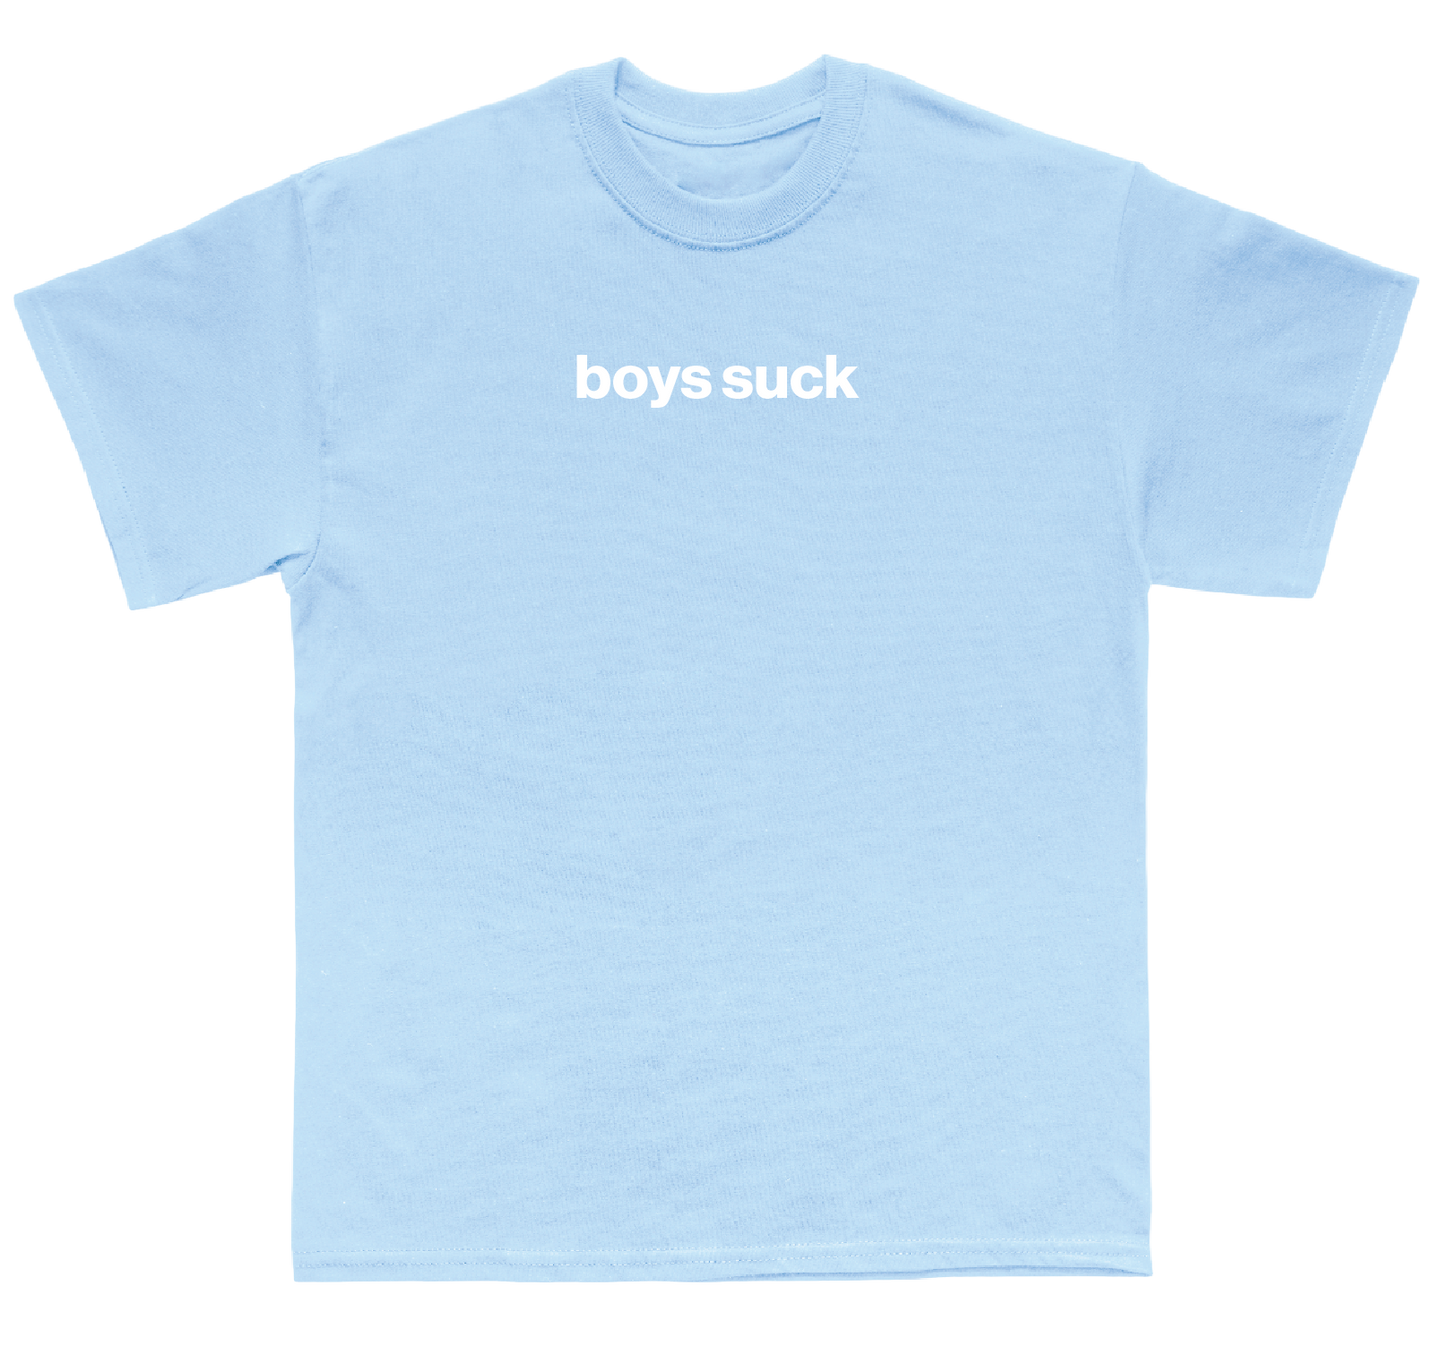 boys suck shirt